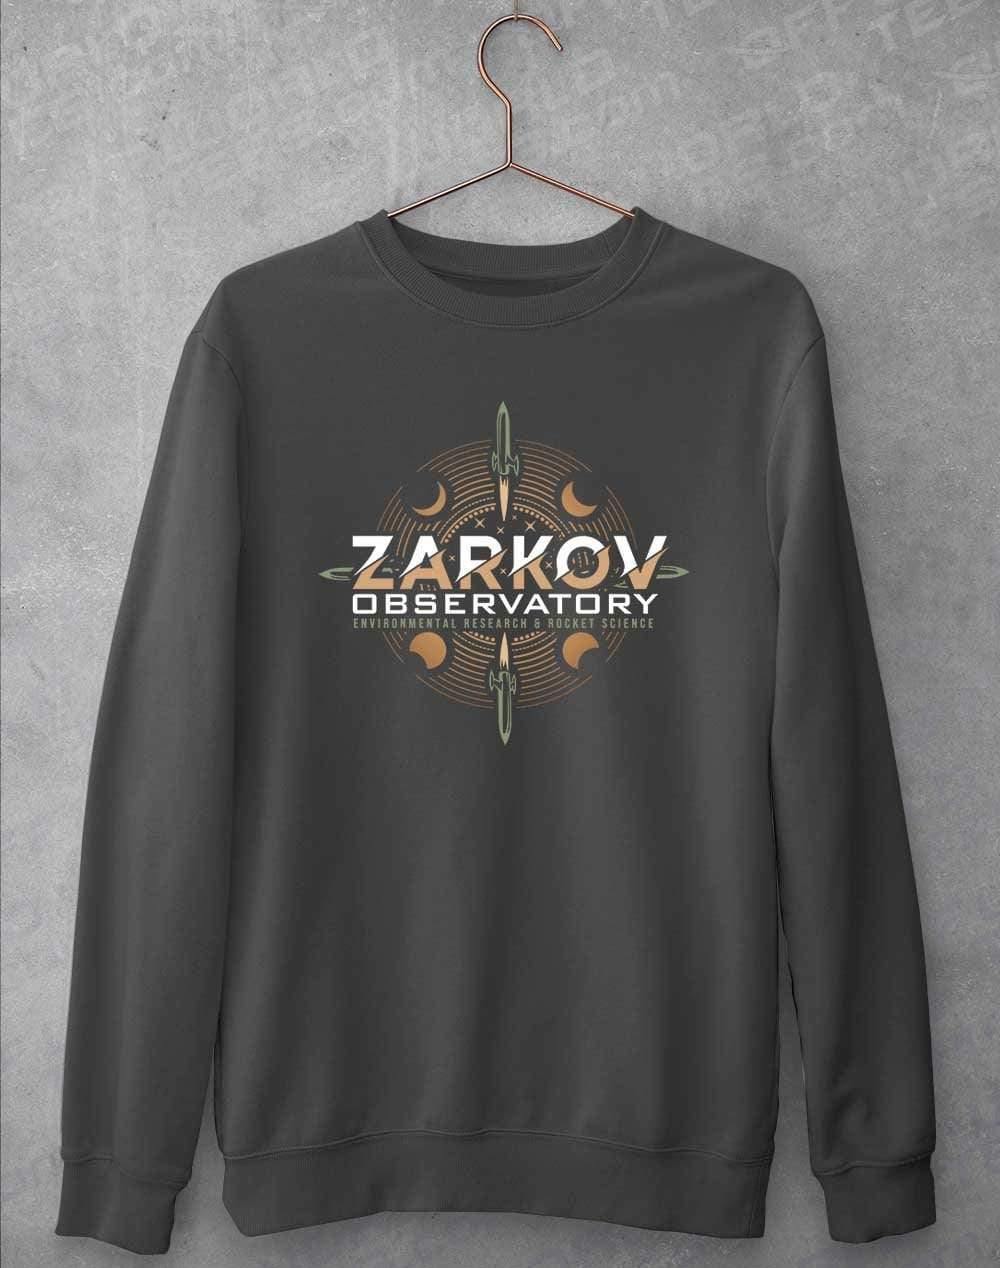 Zarkov Observatory Sweatshirt S / Charcoal  - Off World Tees